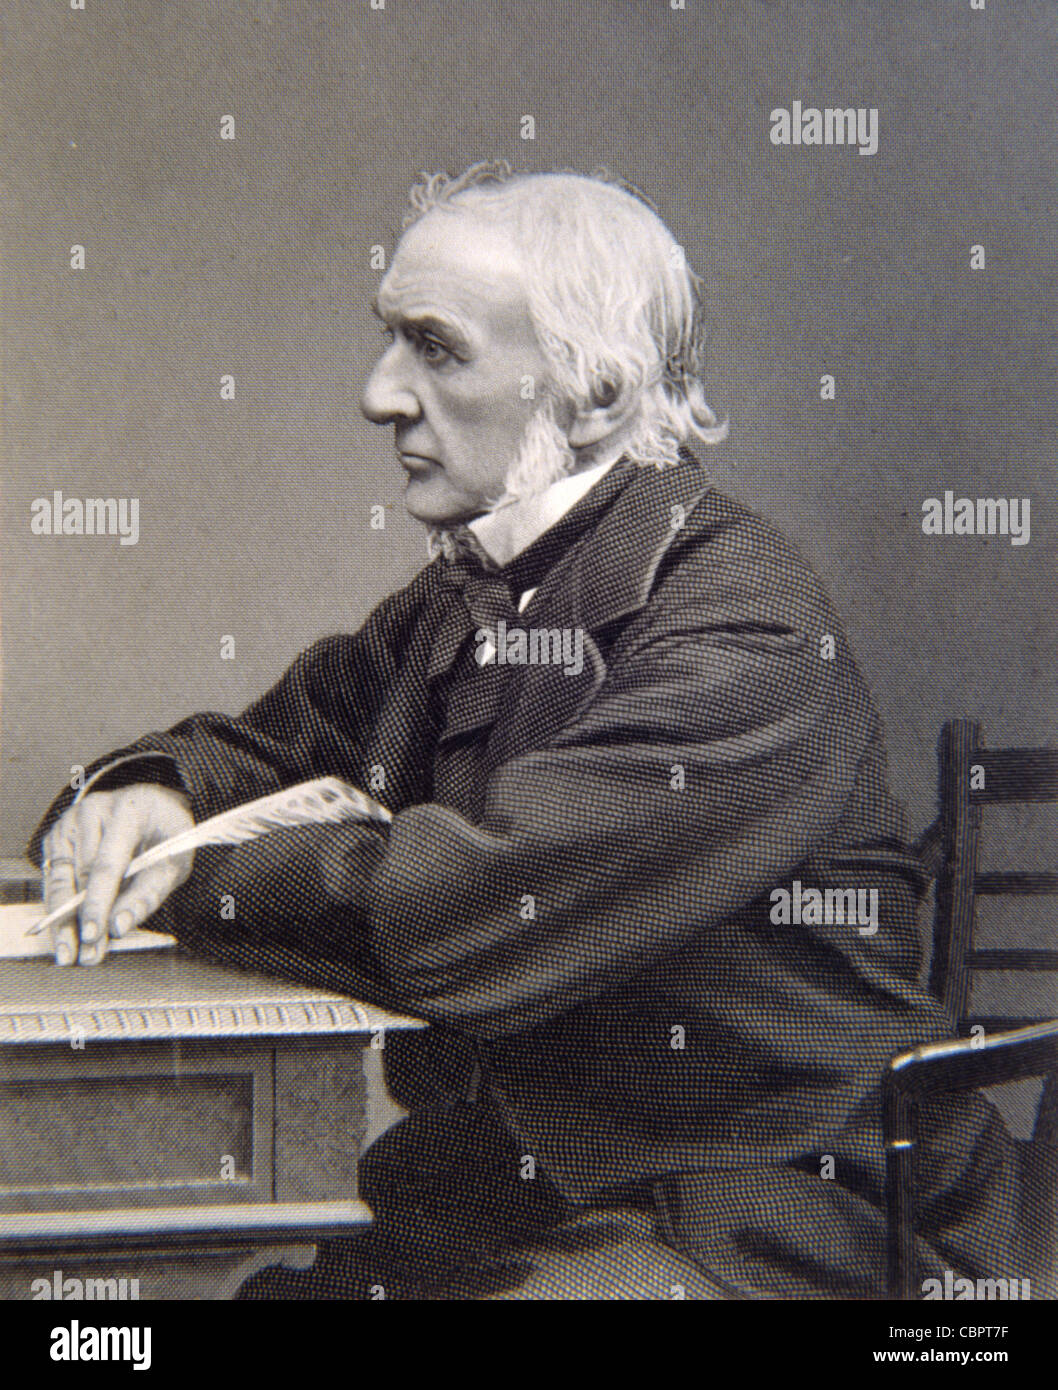 Portrait of William Ewart Gladstone (1809-1898) writing at Desk. British Prime Minister 1868-74, 1880-1885, 1886, 1892-94. c19th Engraving or Vintage Illustration Stock Photo